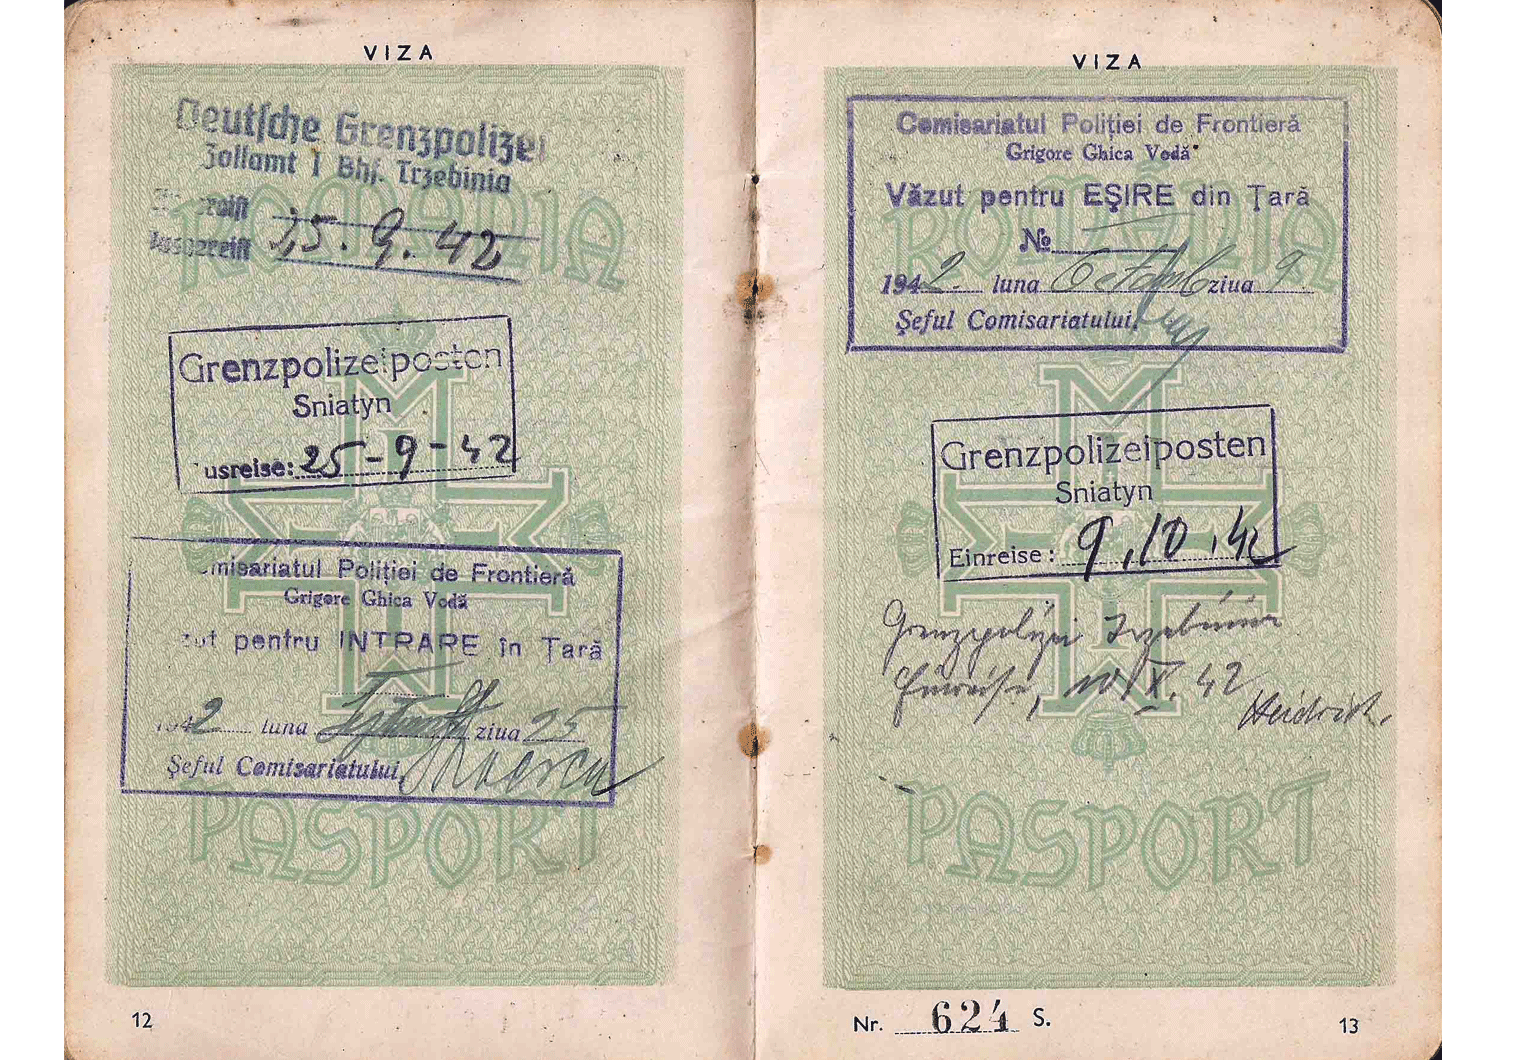 WW2 Romanian Service passport